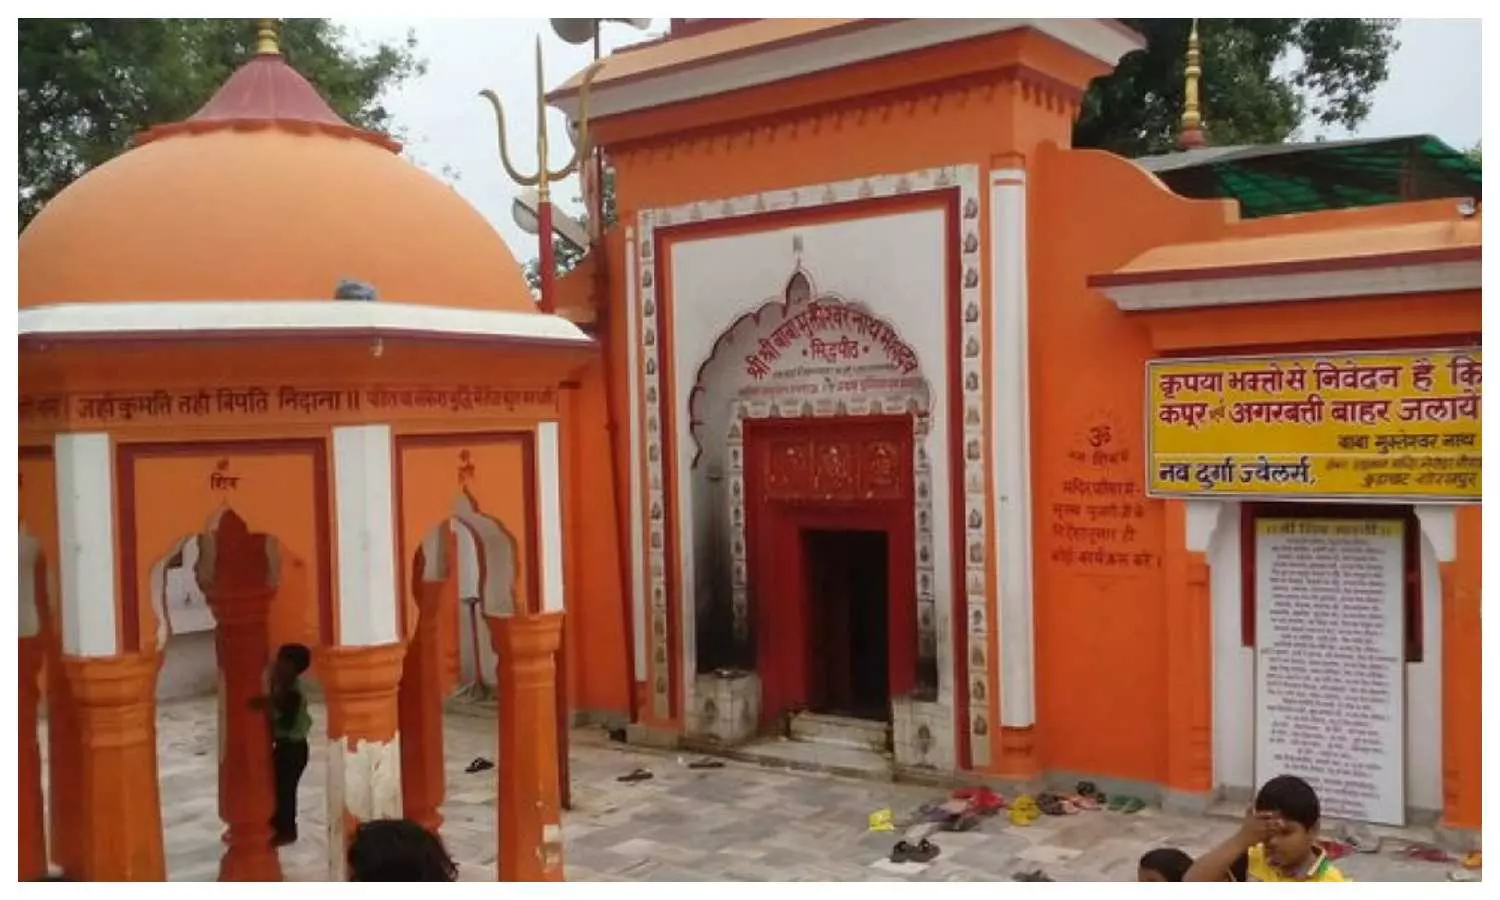 Dugdheshwar Nath Temple